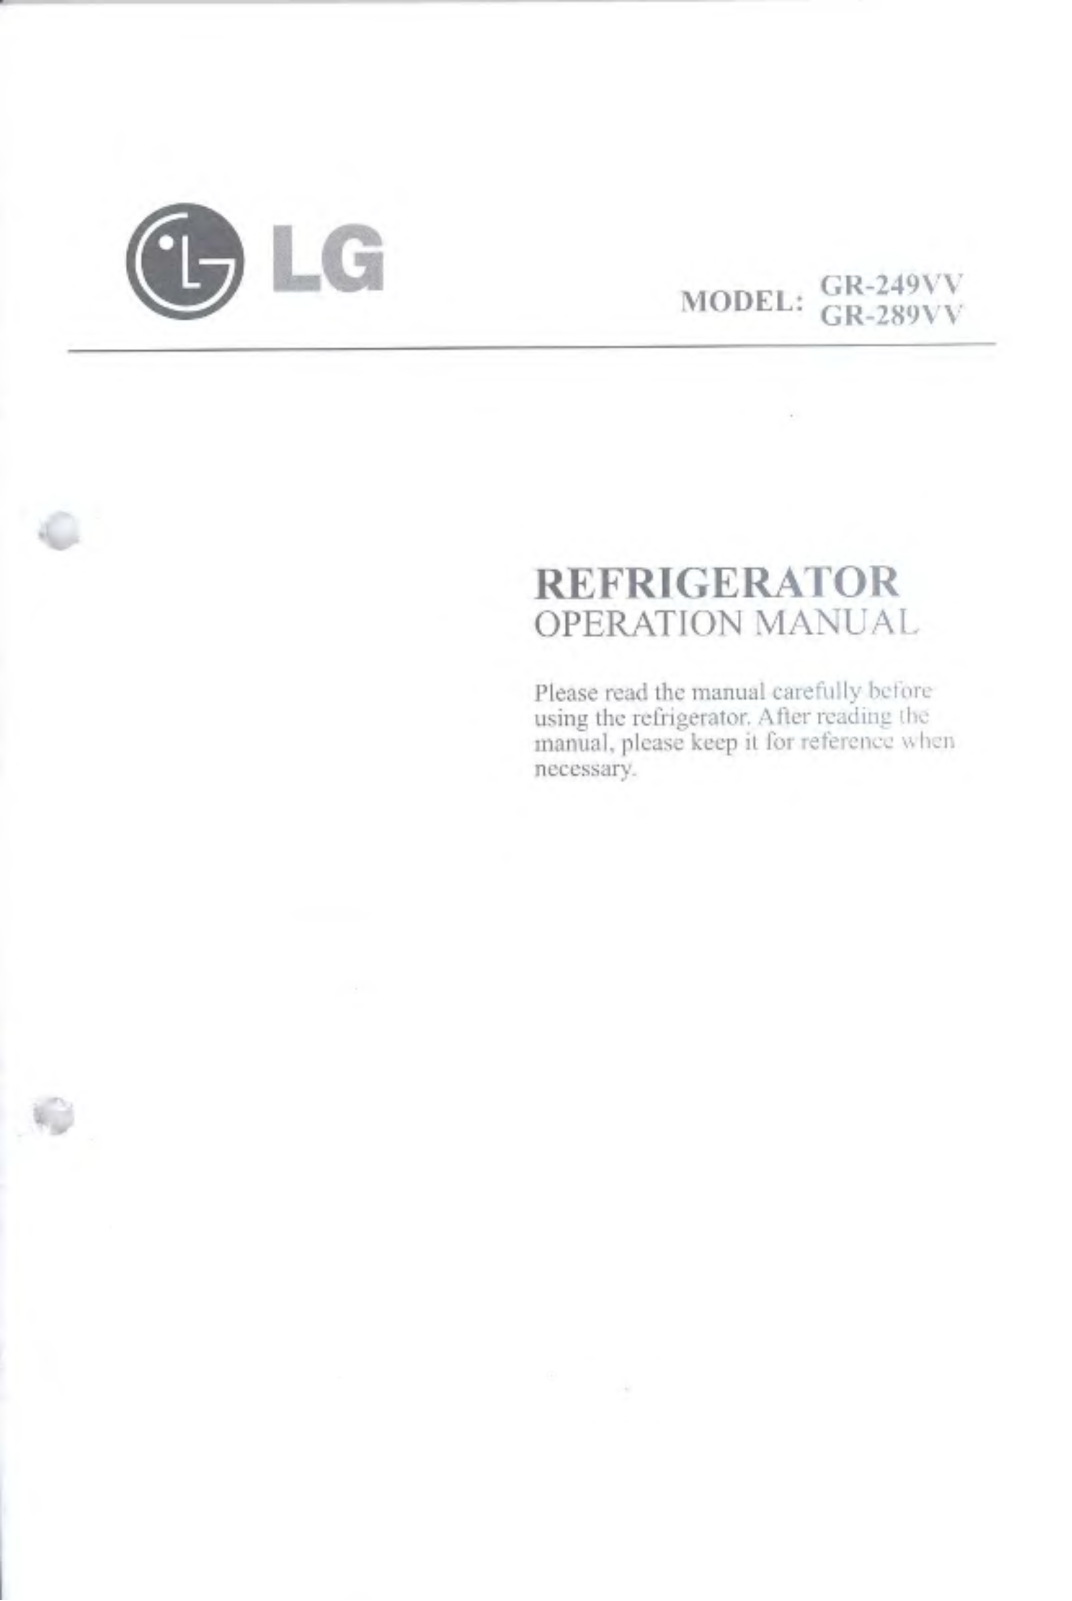 LG GR-289VV, GR-249VV User Manual